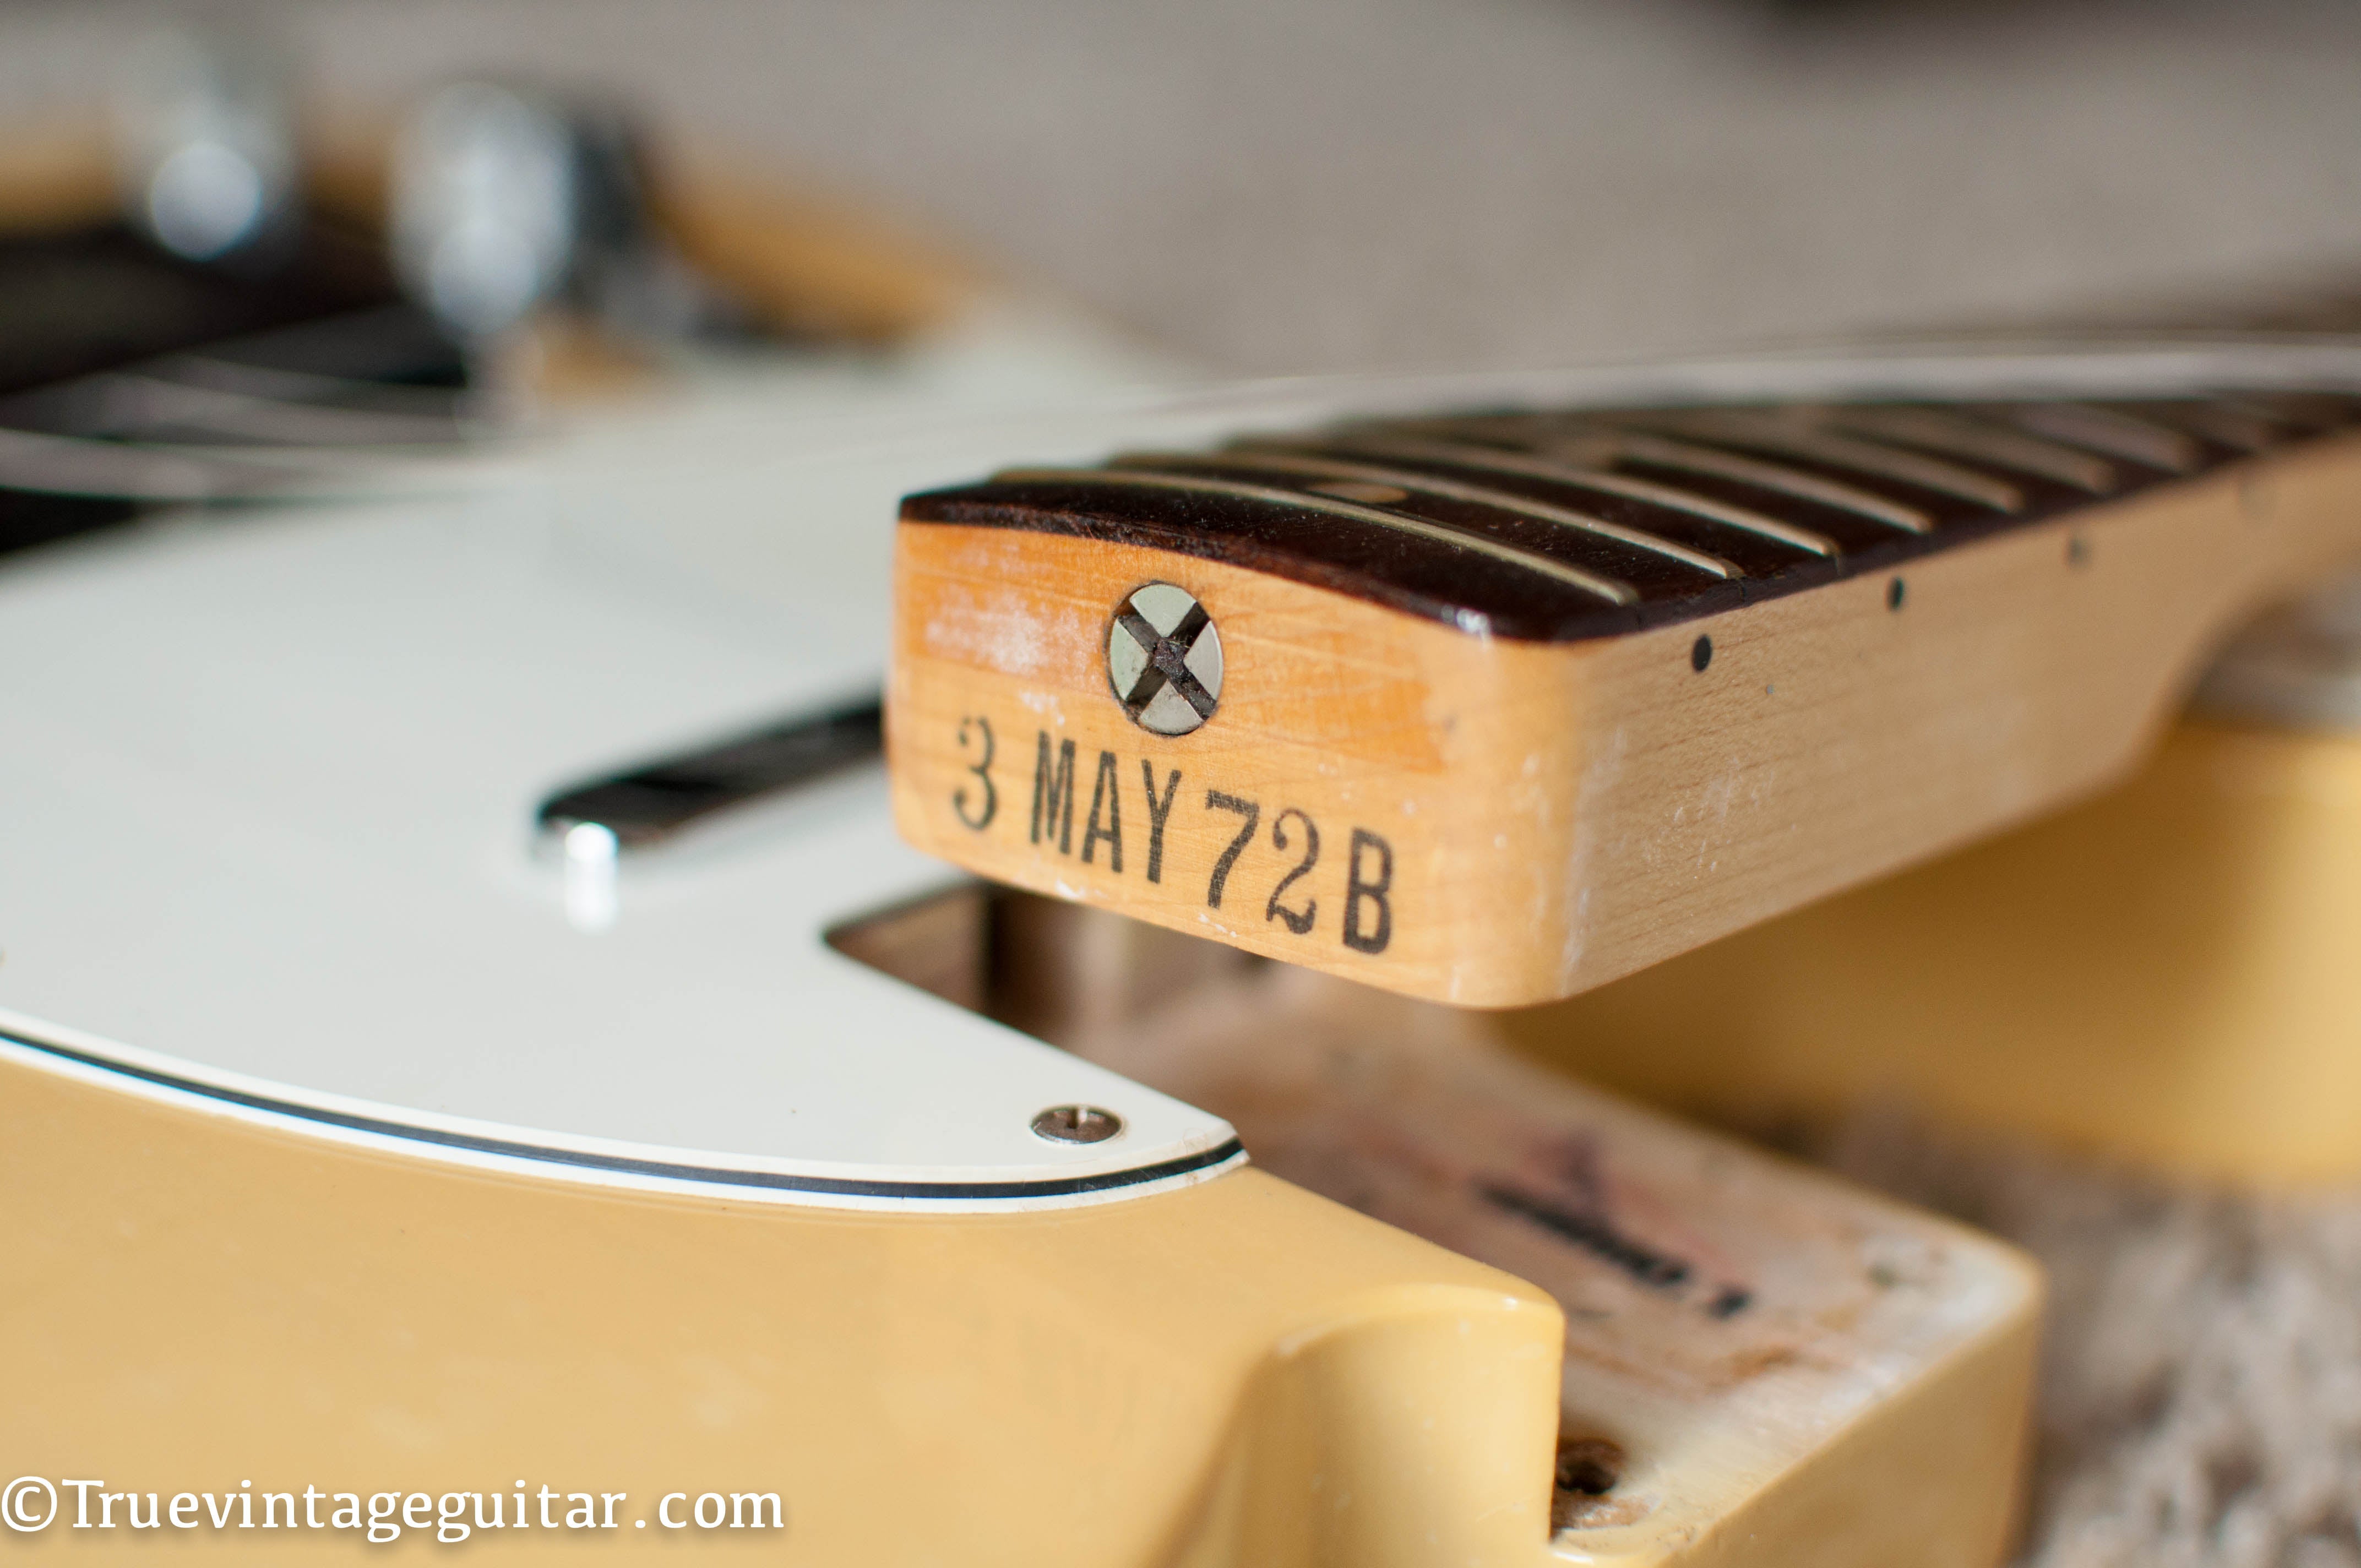 Neck heel date stamp "3MAY72B" 1972 Fender Telecaster